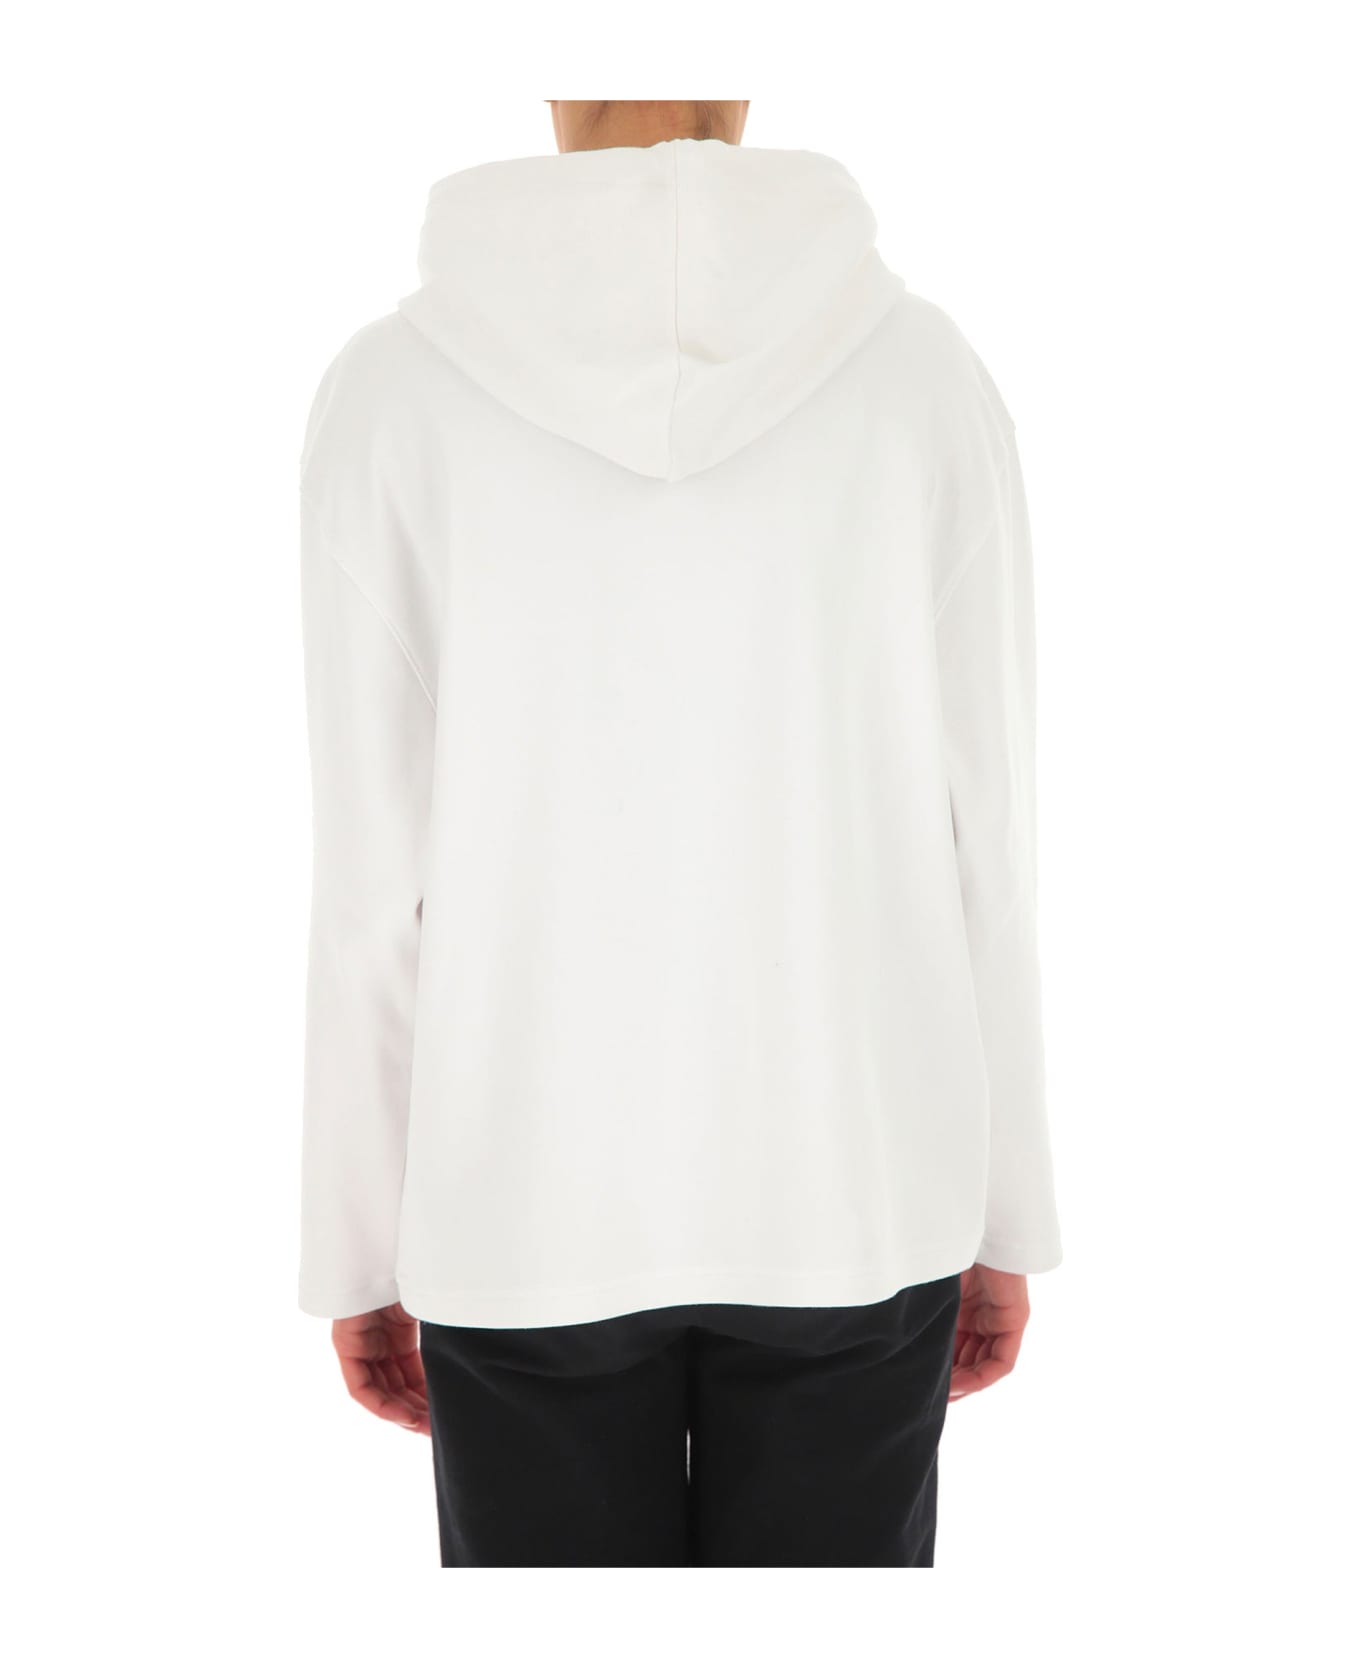 Moschino Couture Logo Hooded Sweatshirt - White